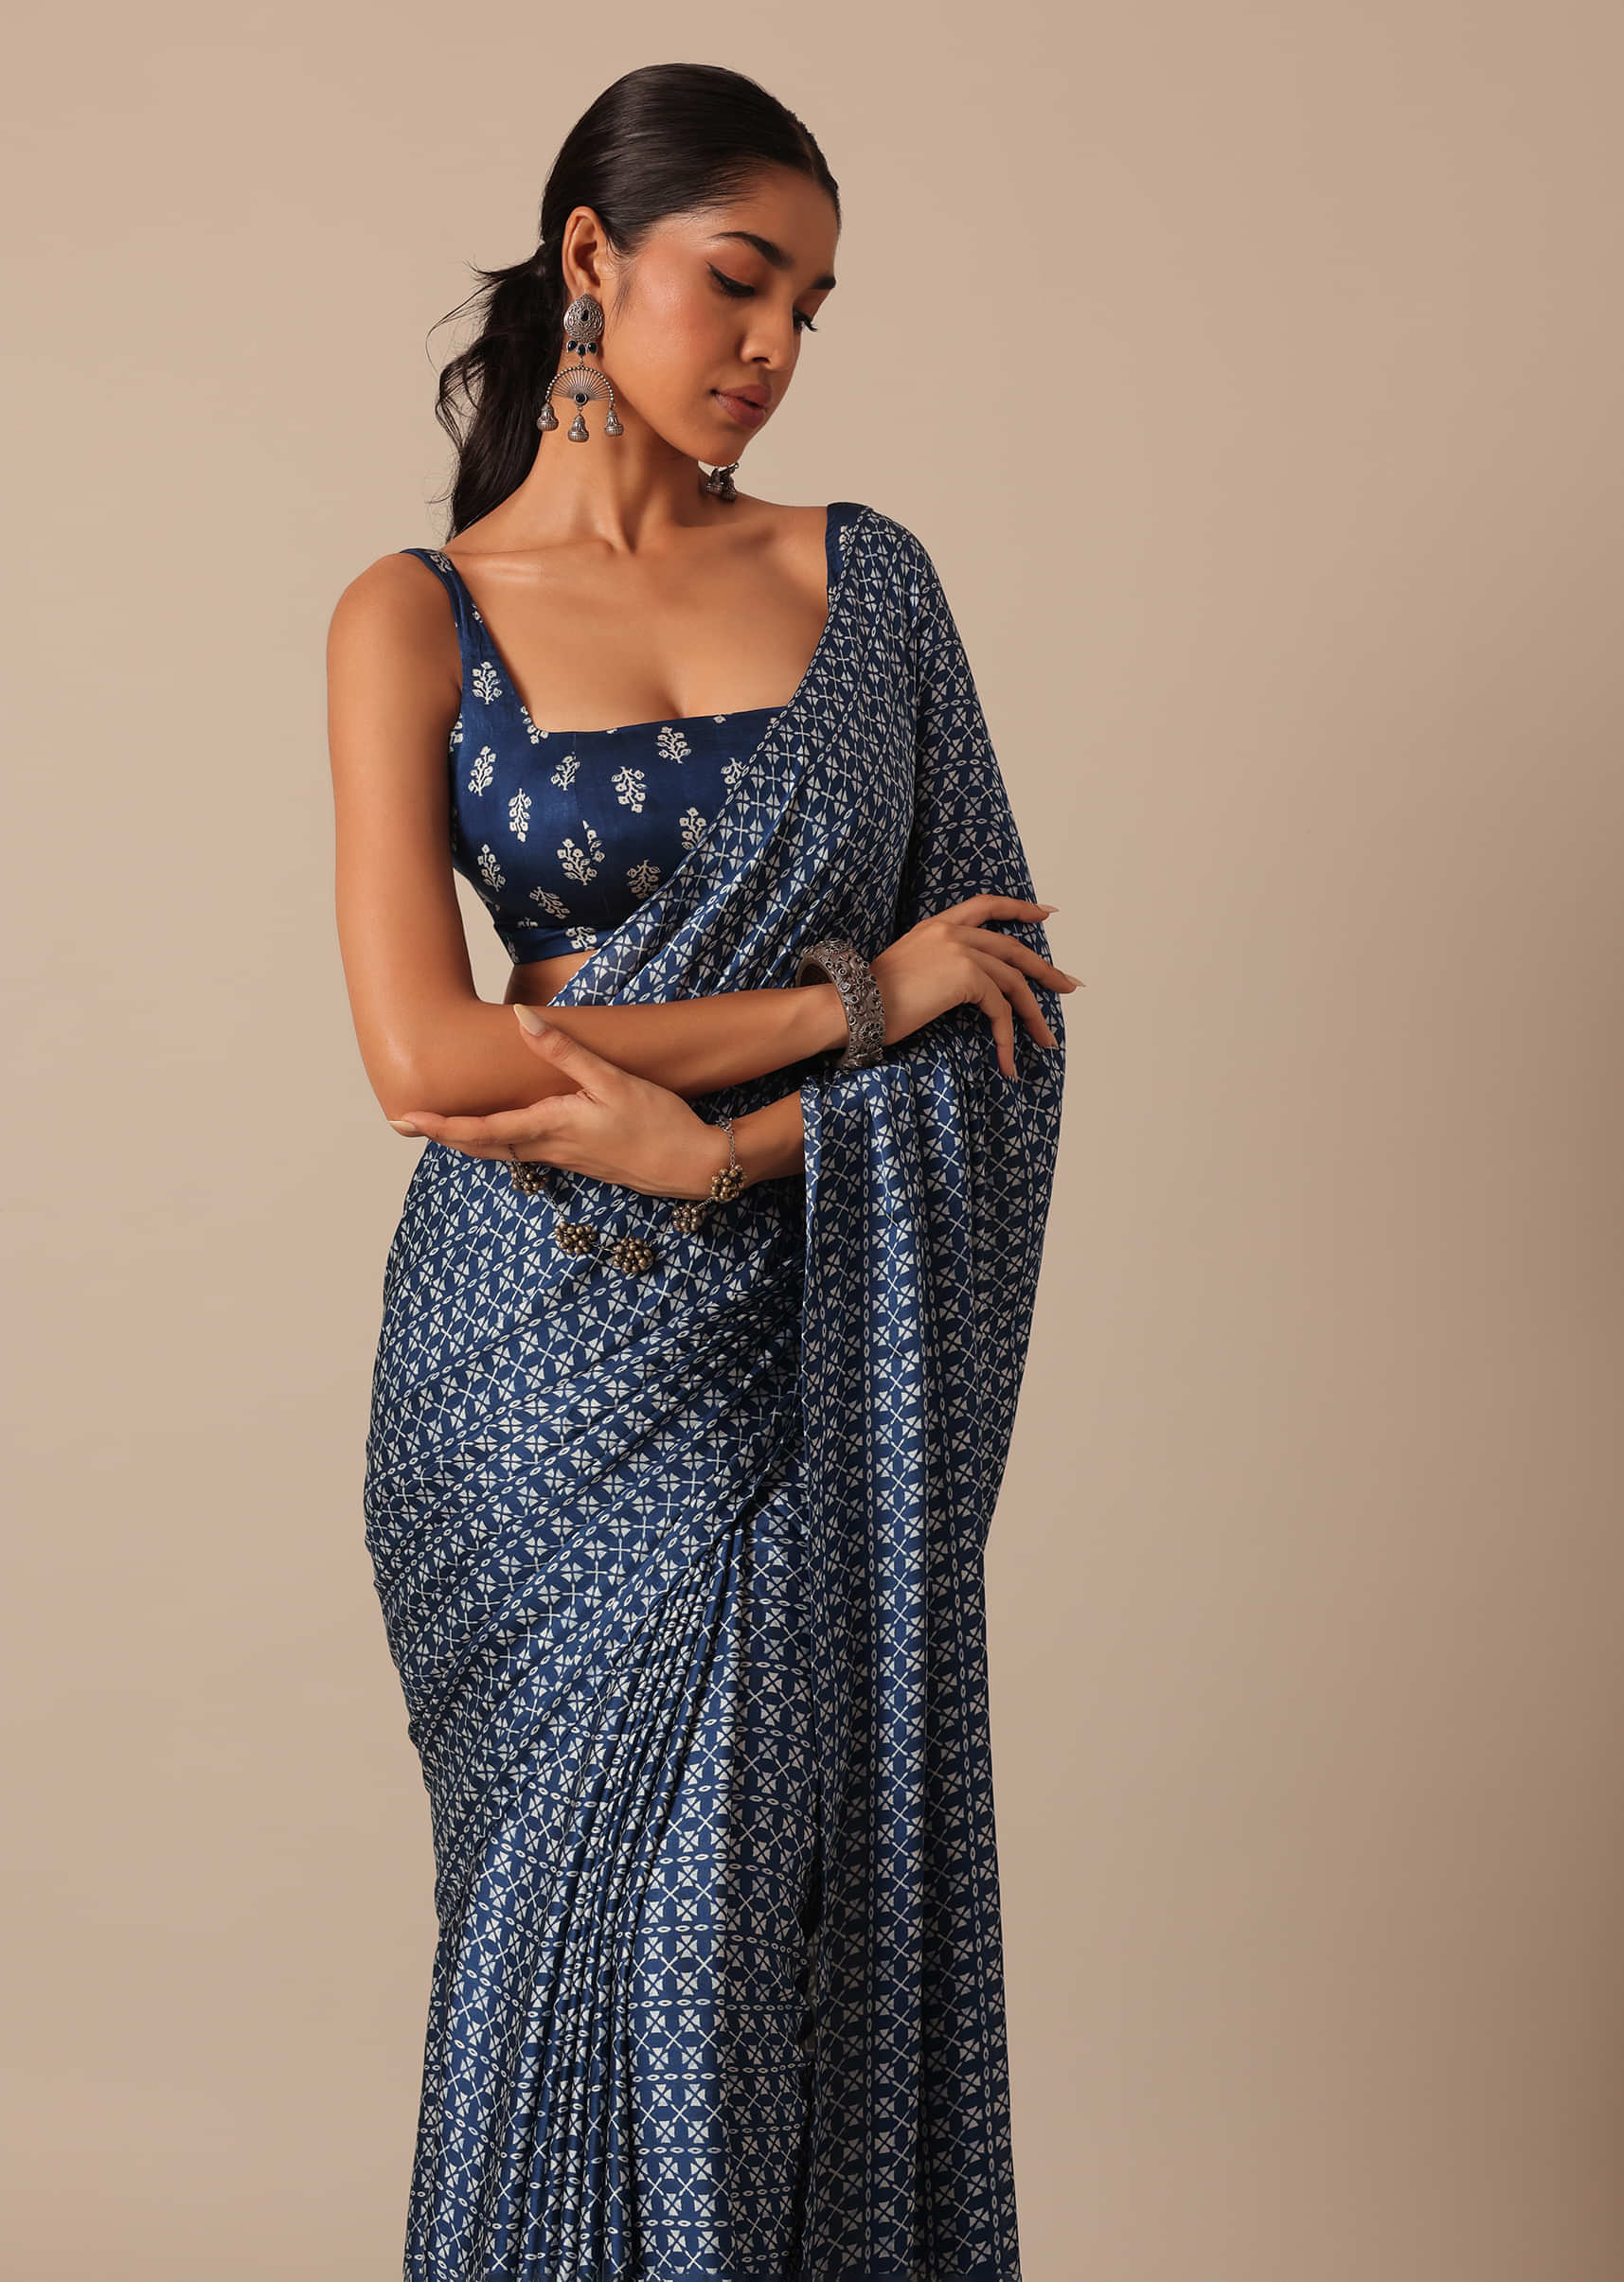 Online Women's Clothing Shop - Silk Sarees & Dresses